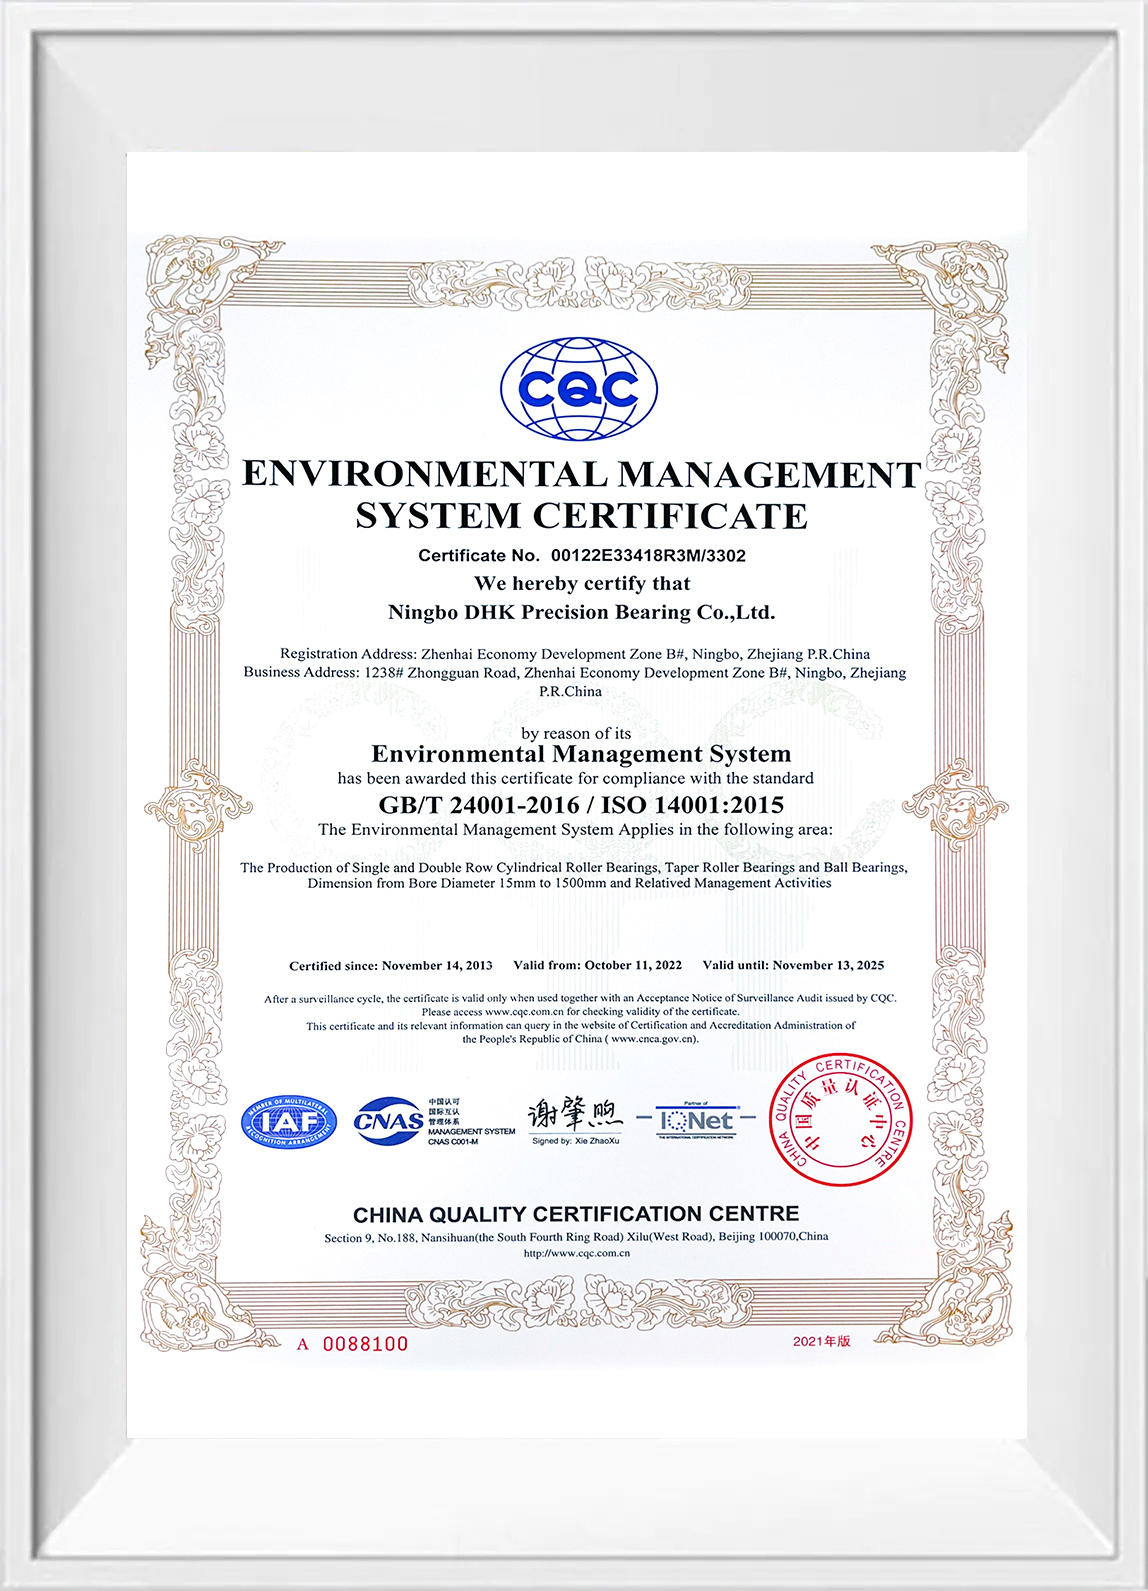 Environmental Managementsystem Certificate